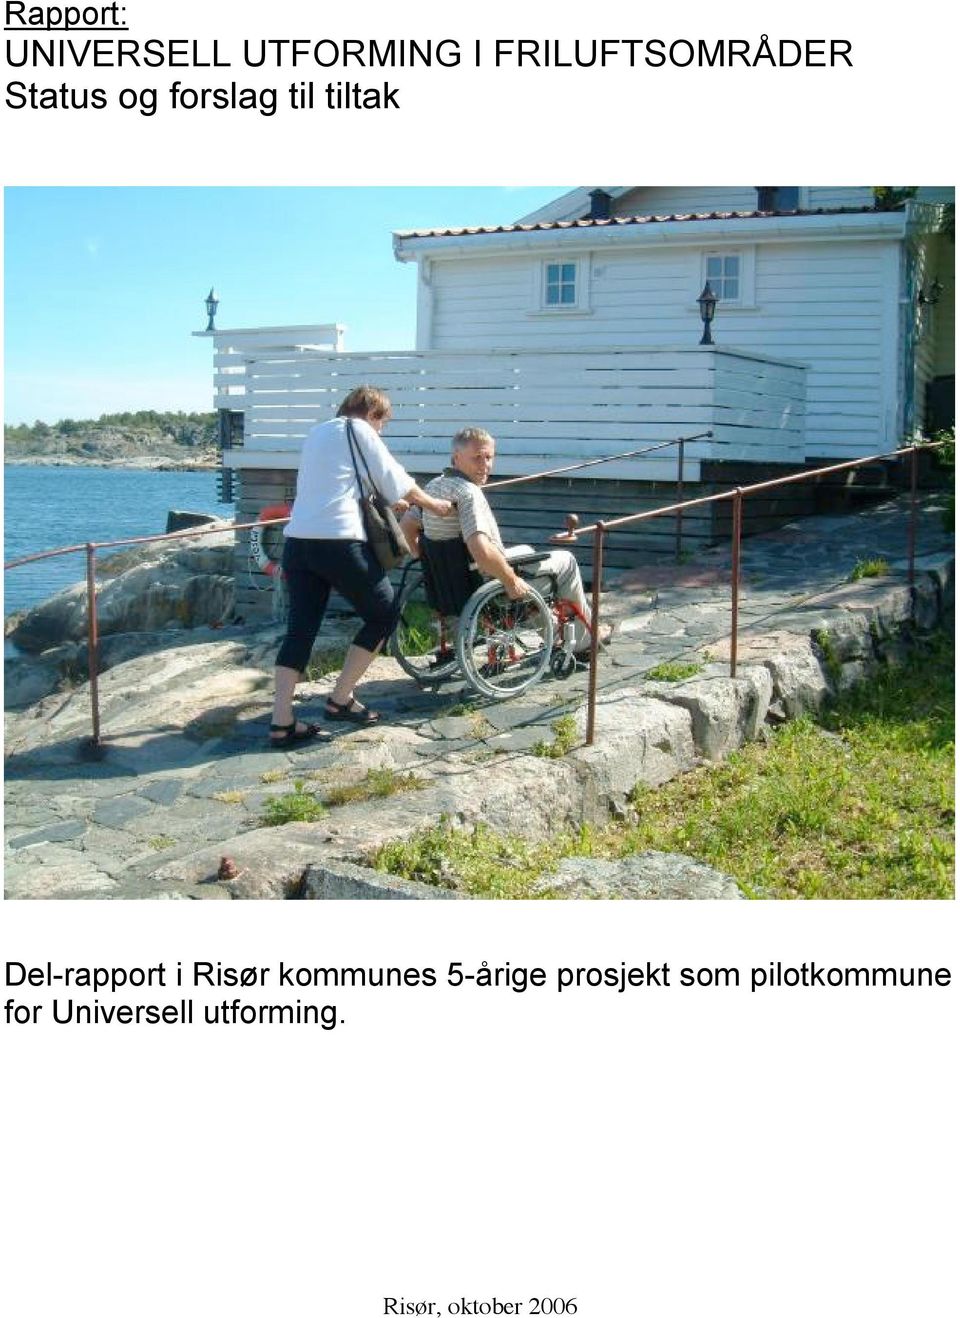 Del-rapport i Risør kommunes 5-årige prosjekt